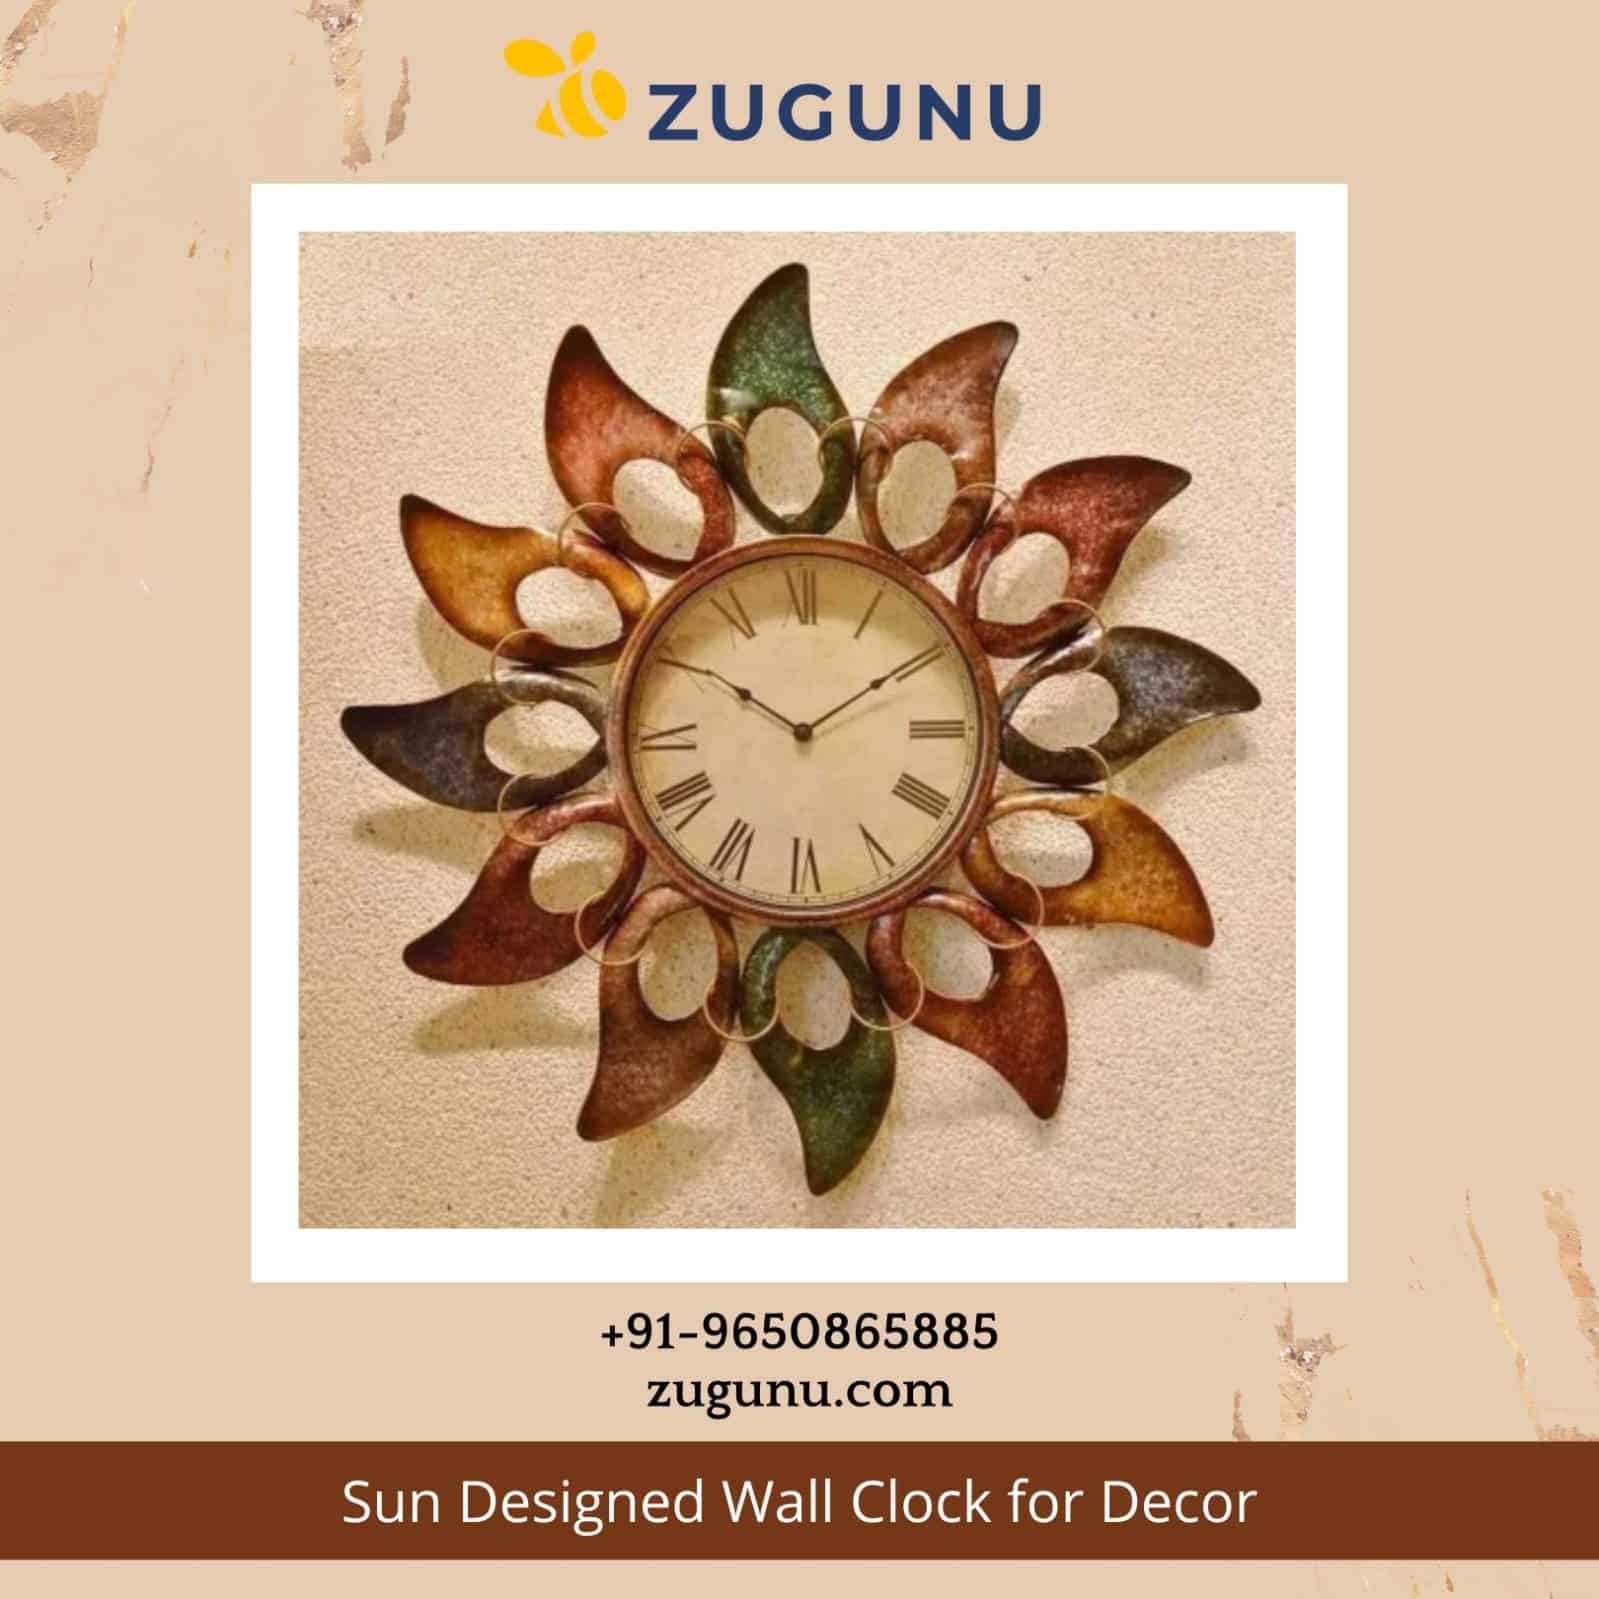 Best Wall Clock For Decor From Zugunu Sun Designed